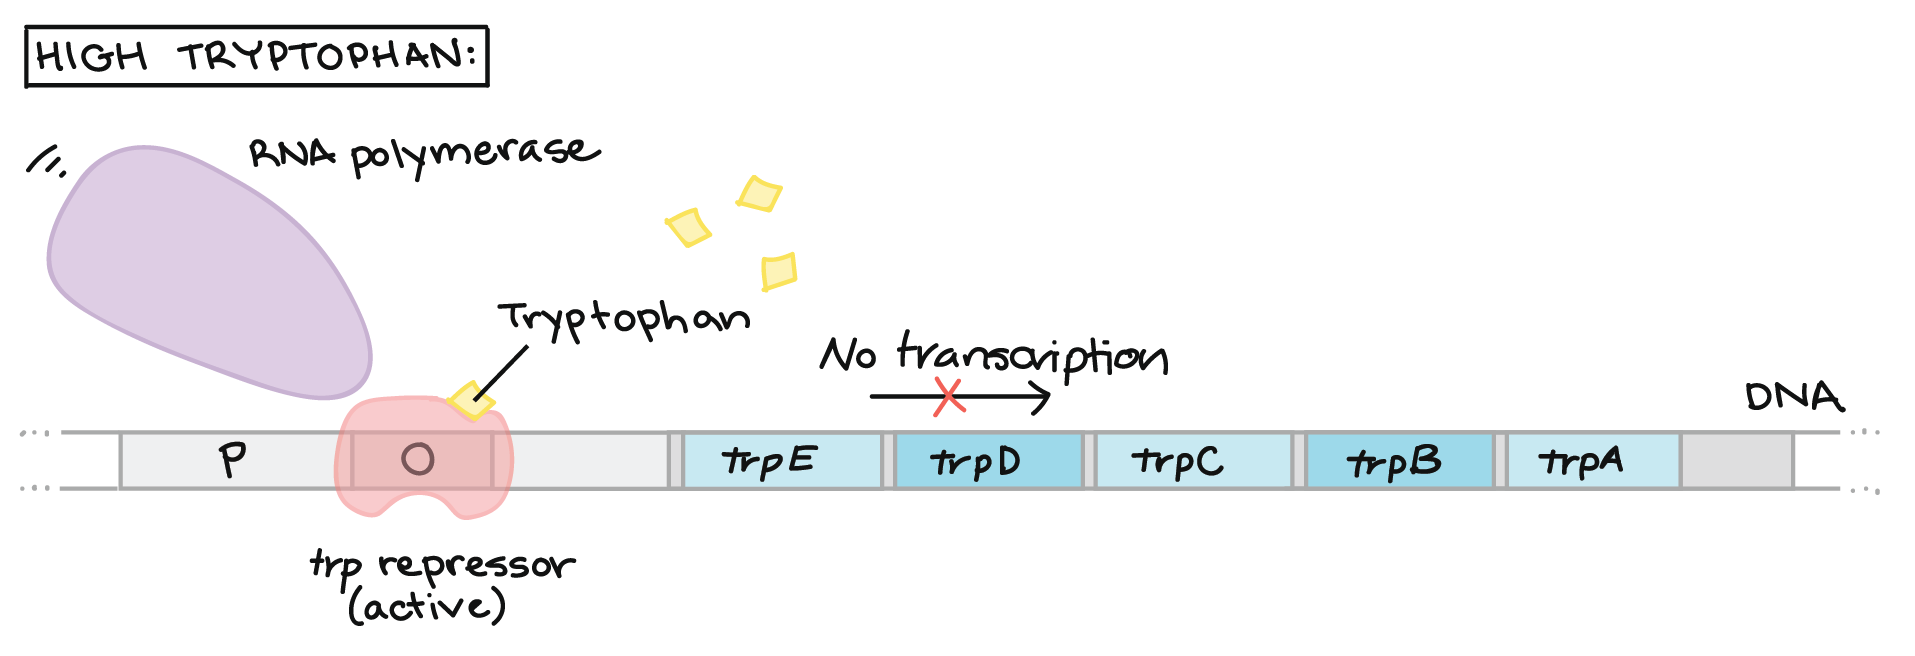 tryptophan operon diagram